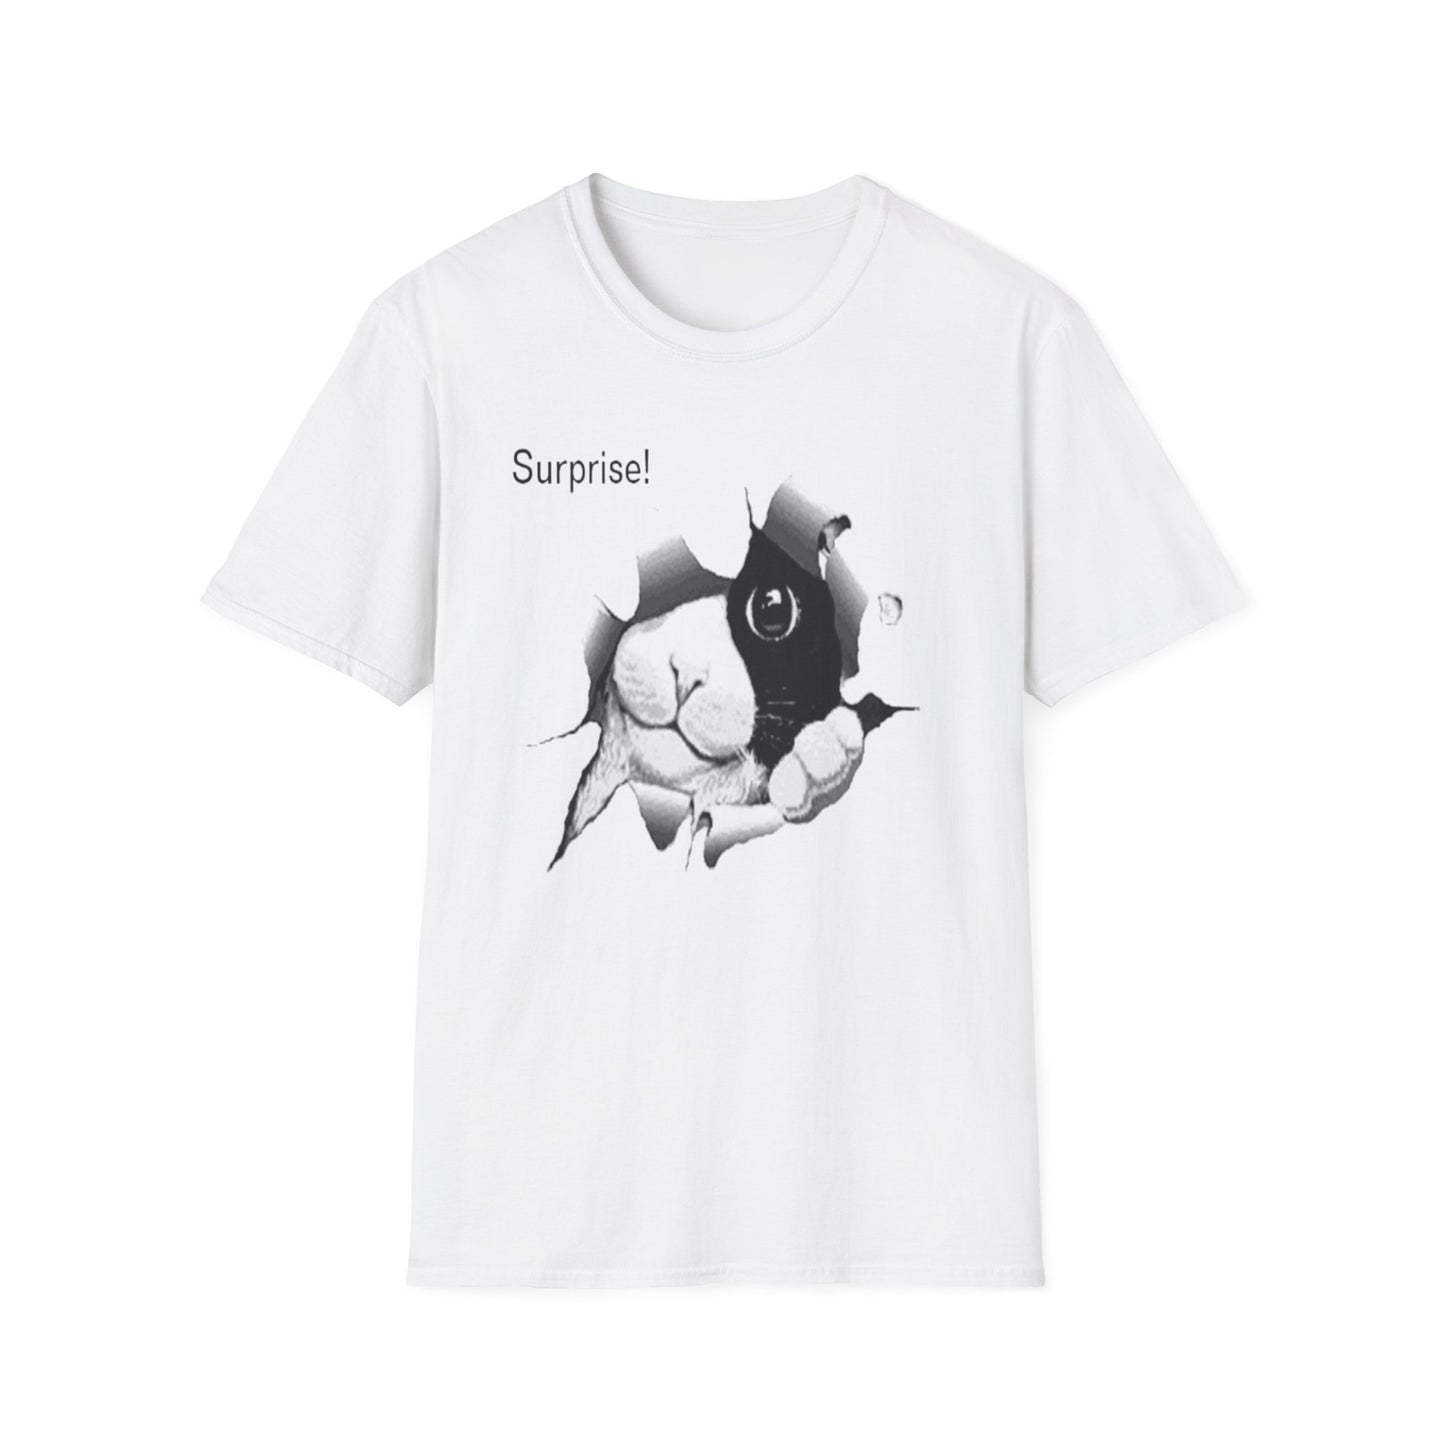 Curious Black and White Cat  Surprise T-Shirt